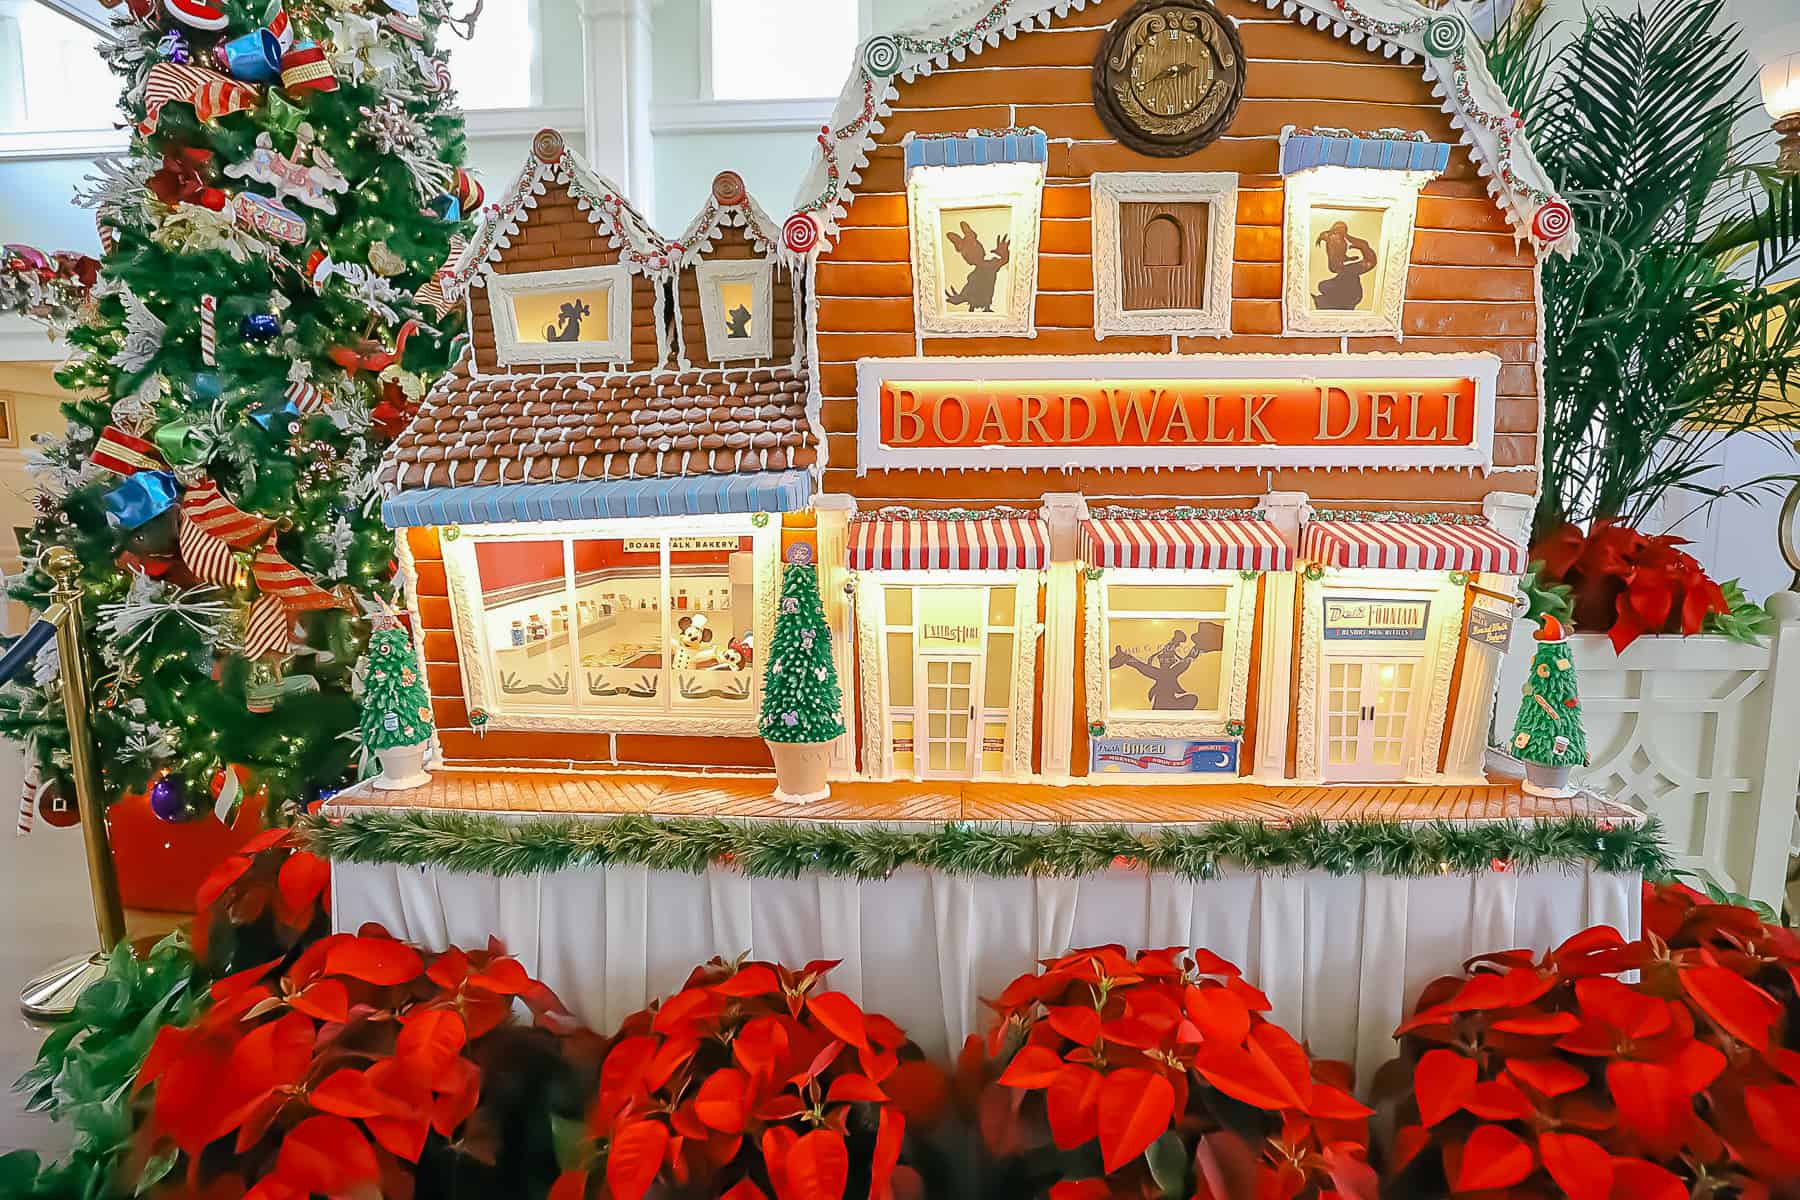 The gingerbread house in 2023 at Disney's Boardwalk Inn